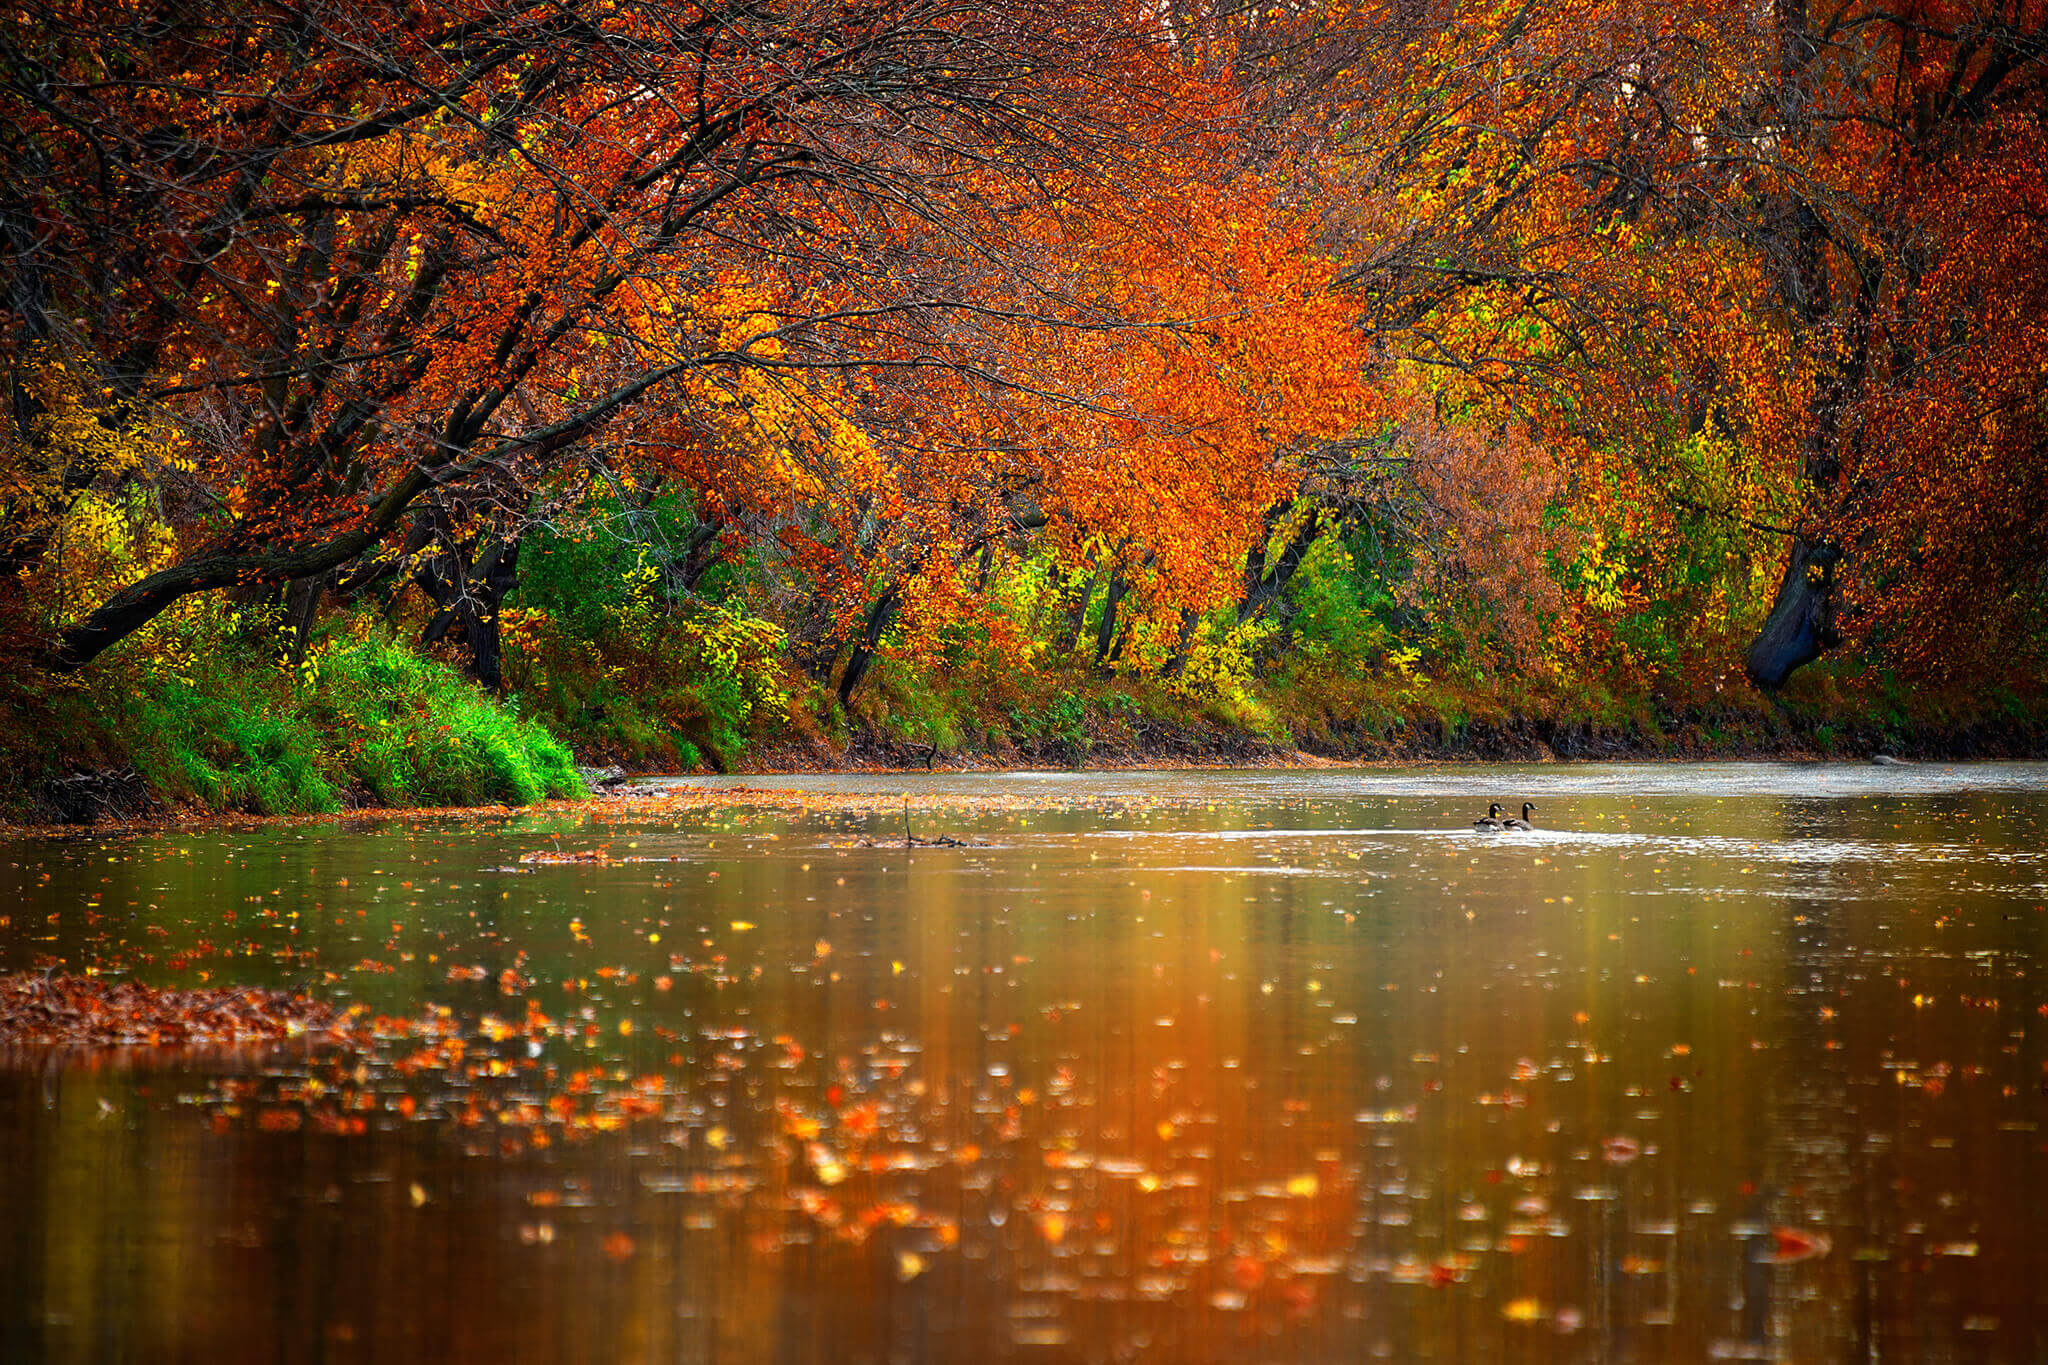 Ducks in River - Fall Foliage